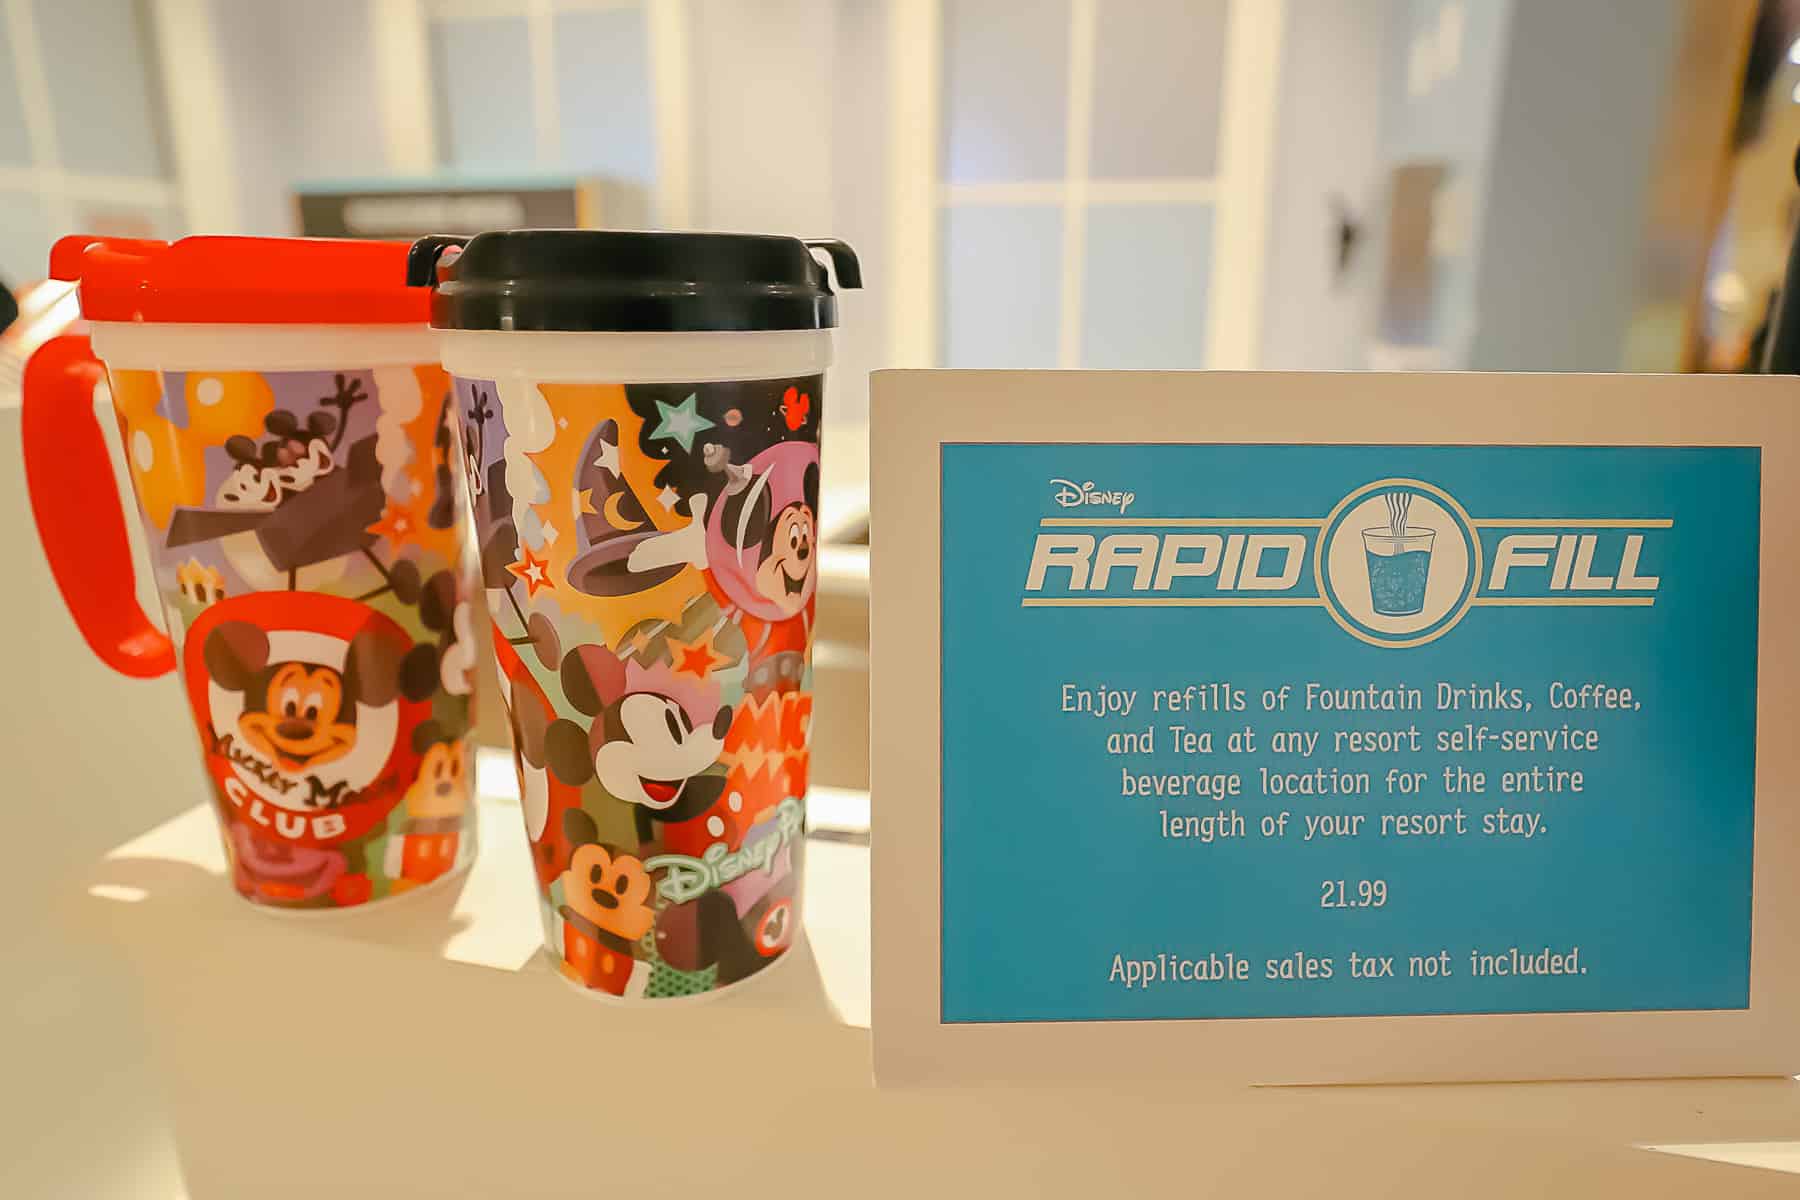 A display that shows a Rapid Fill mug option at Disney's Caribbean Beach.